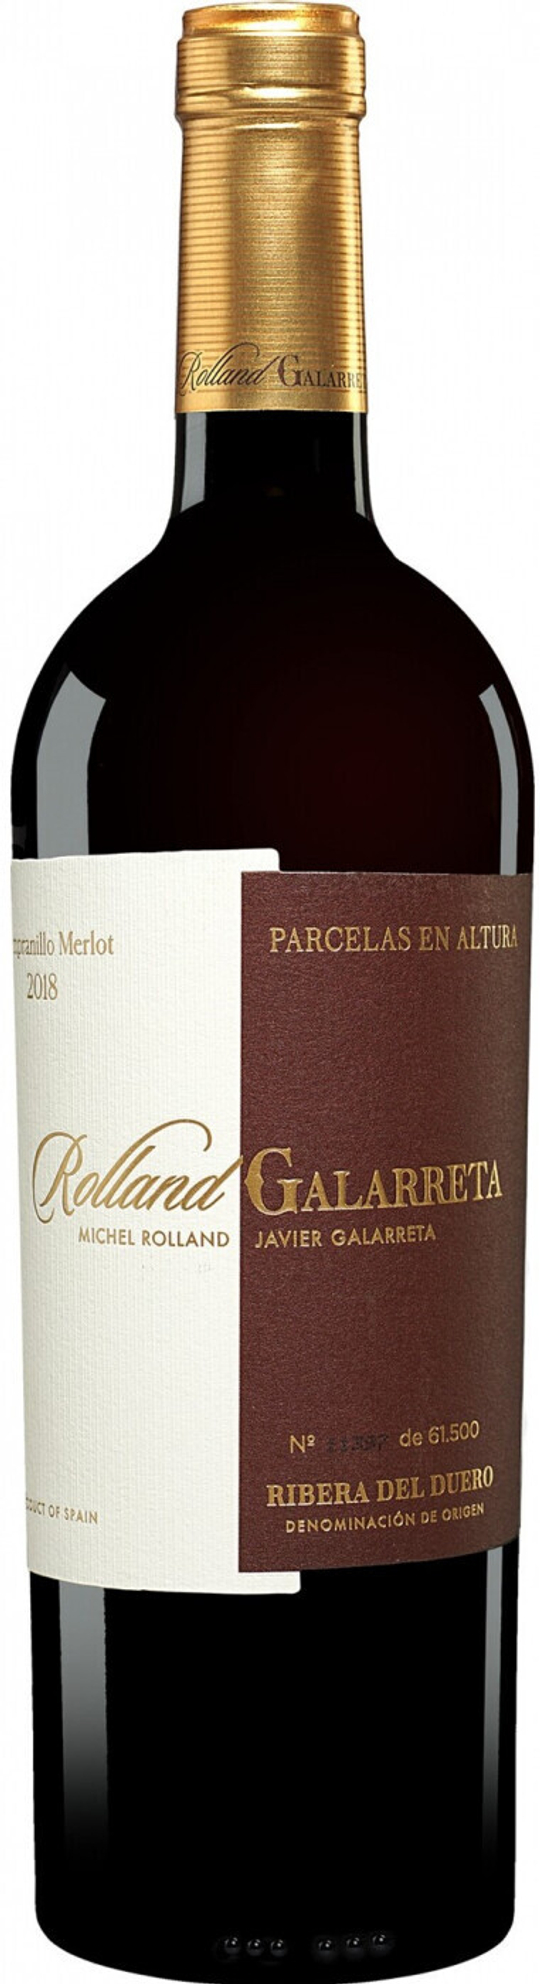 Вино Rolland & Galarreta Ribera del Duero, 0,75 л.